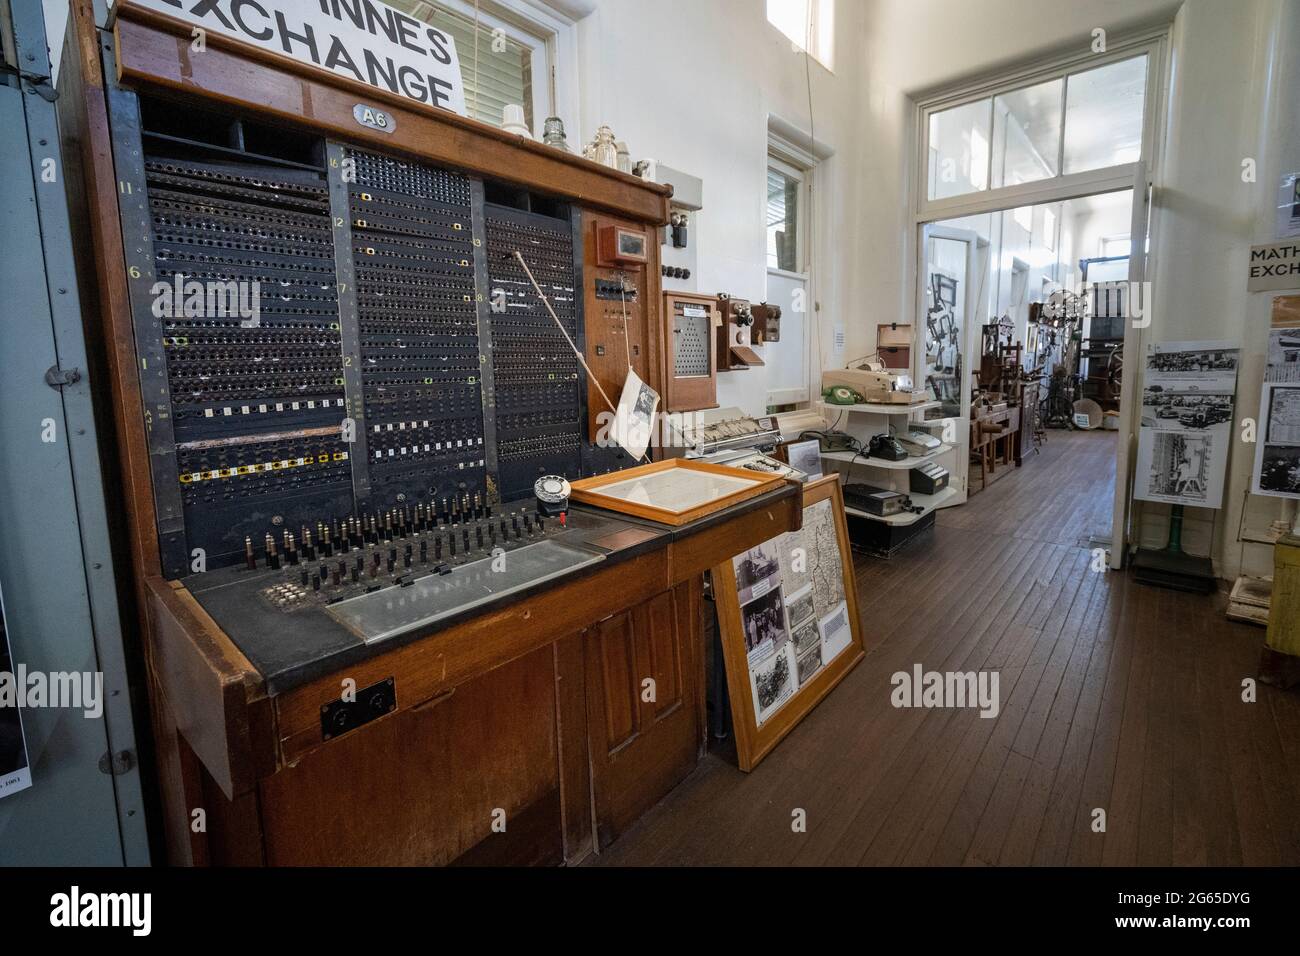 Alte Telefonzentrale, Land of the Beardies History House Museum, im Old Glen Innes Hospital Gebäude, Glen Innes NSW Australien Stockfoto